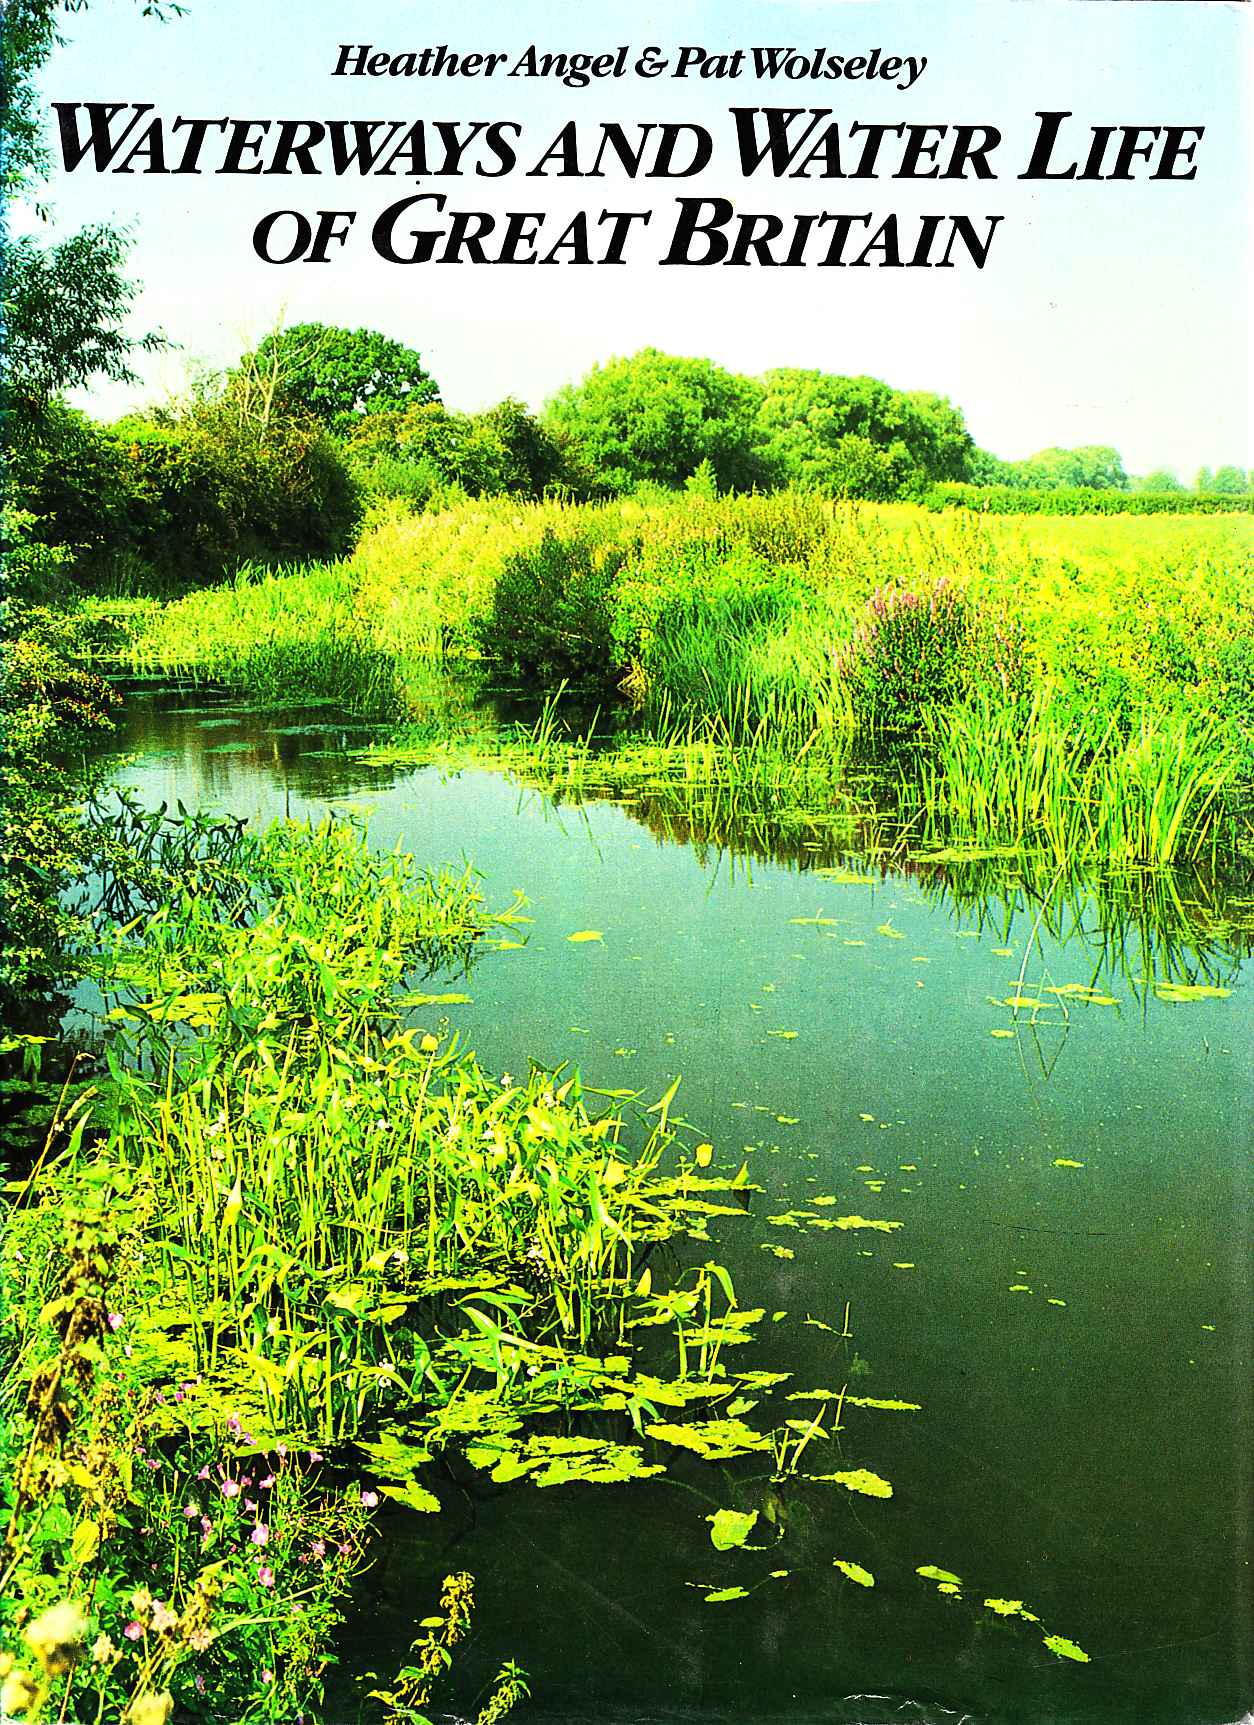 waterways and waterl life of Great Britain (Angel & Wolseley)